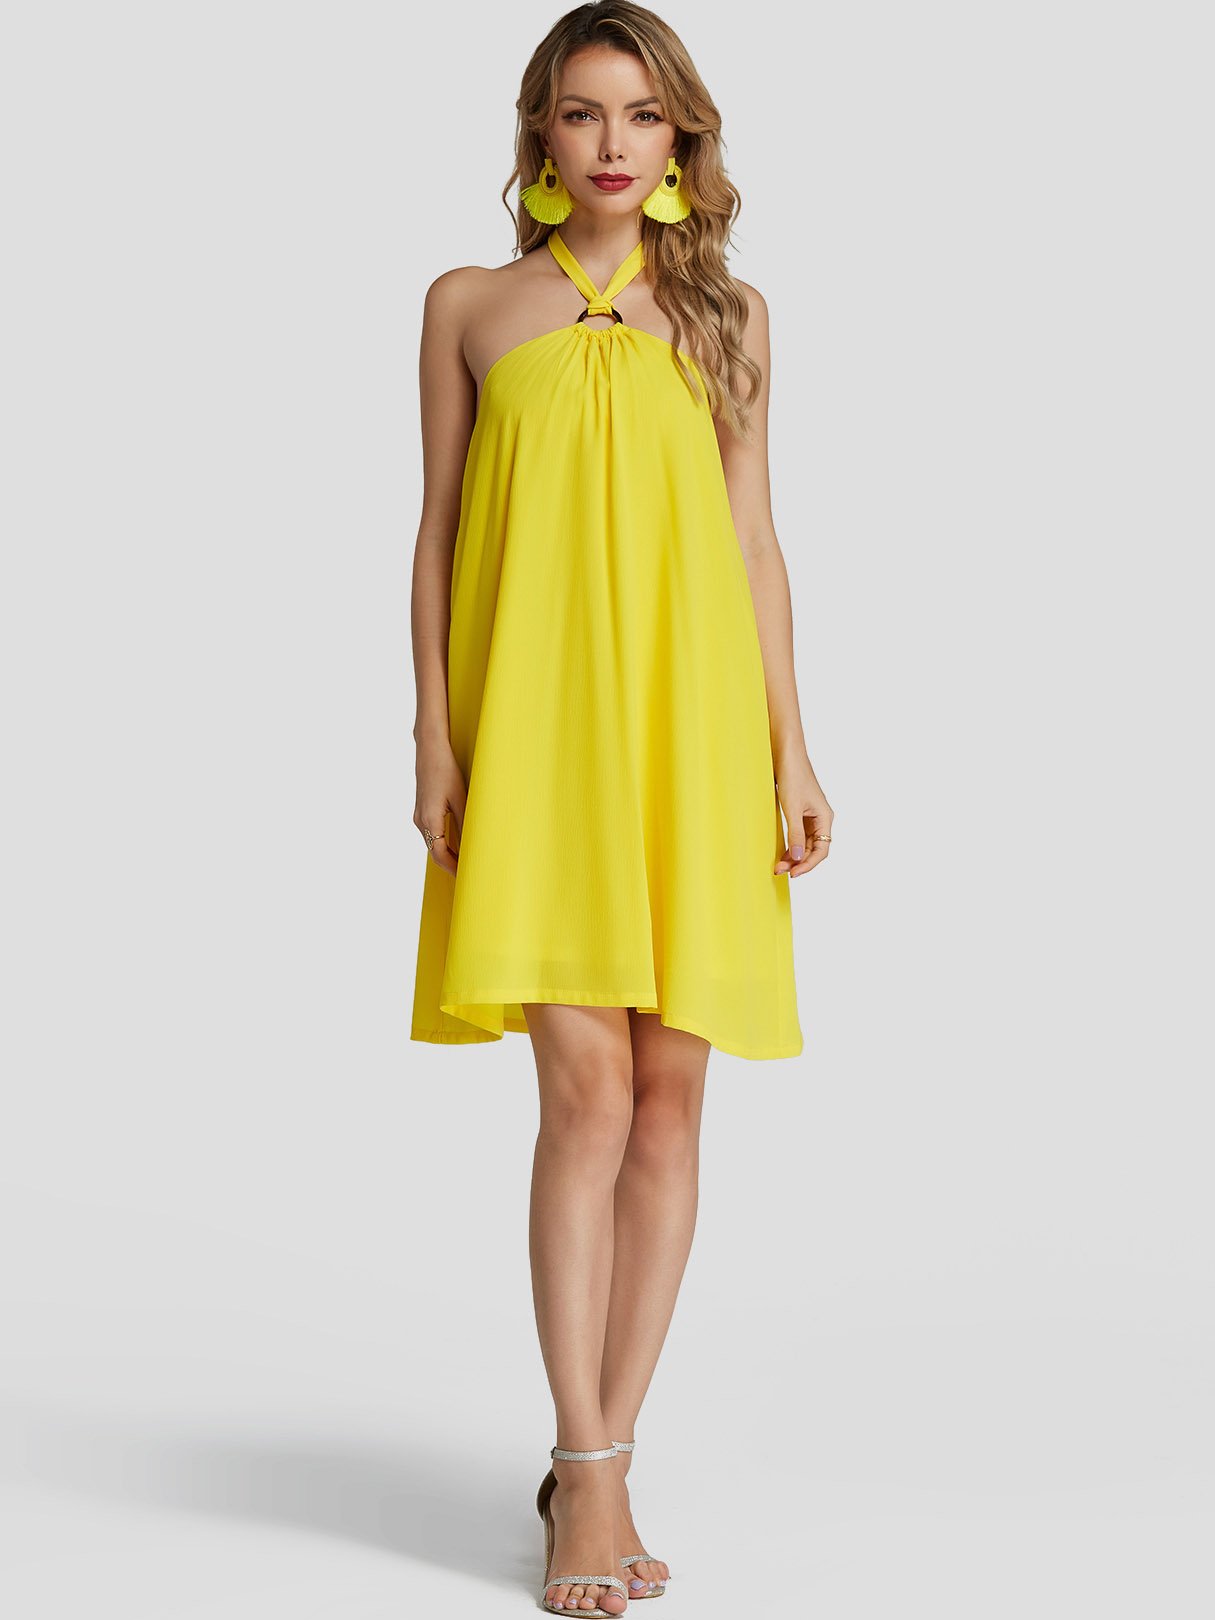 NEW FEELING Womens Yellow Chiffon Dresses